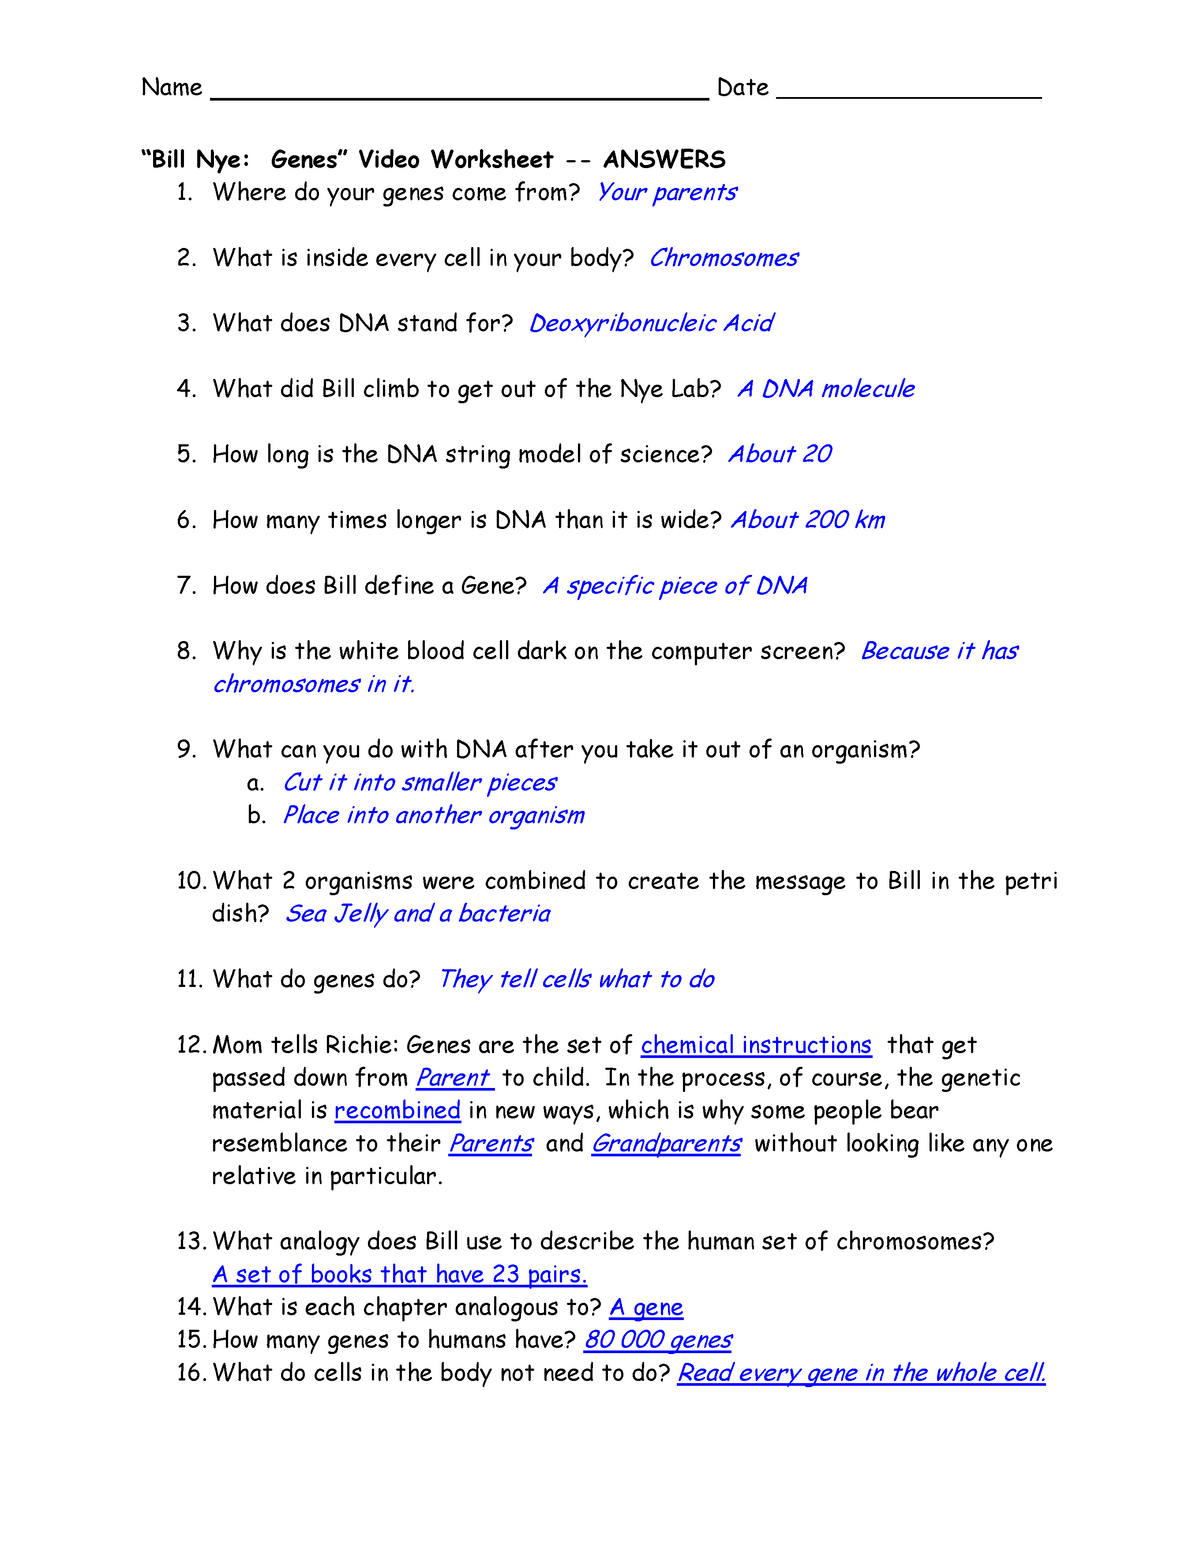 Bill nye genes worksheet answer key s - PCB 22 - General Regarding Bill Nye Genes Worksheet